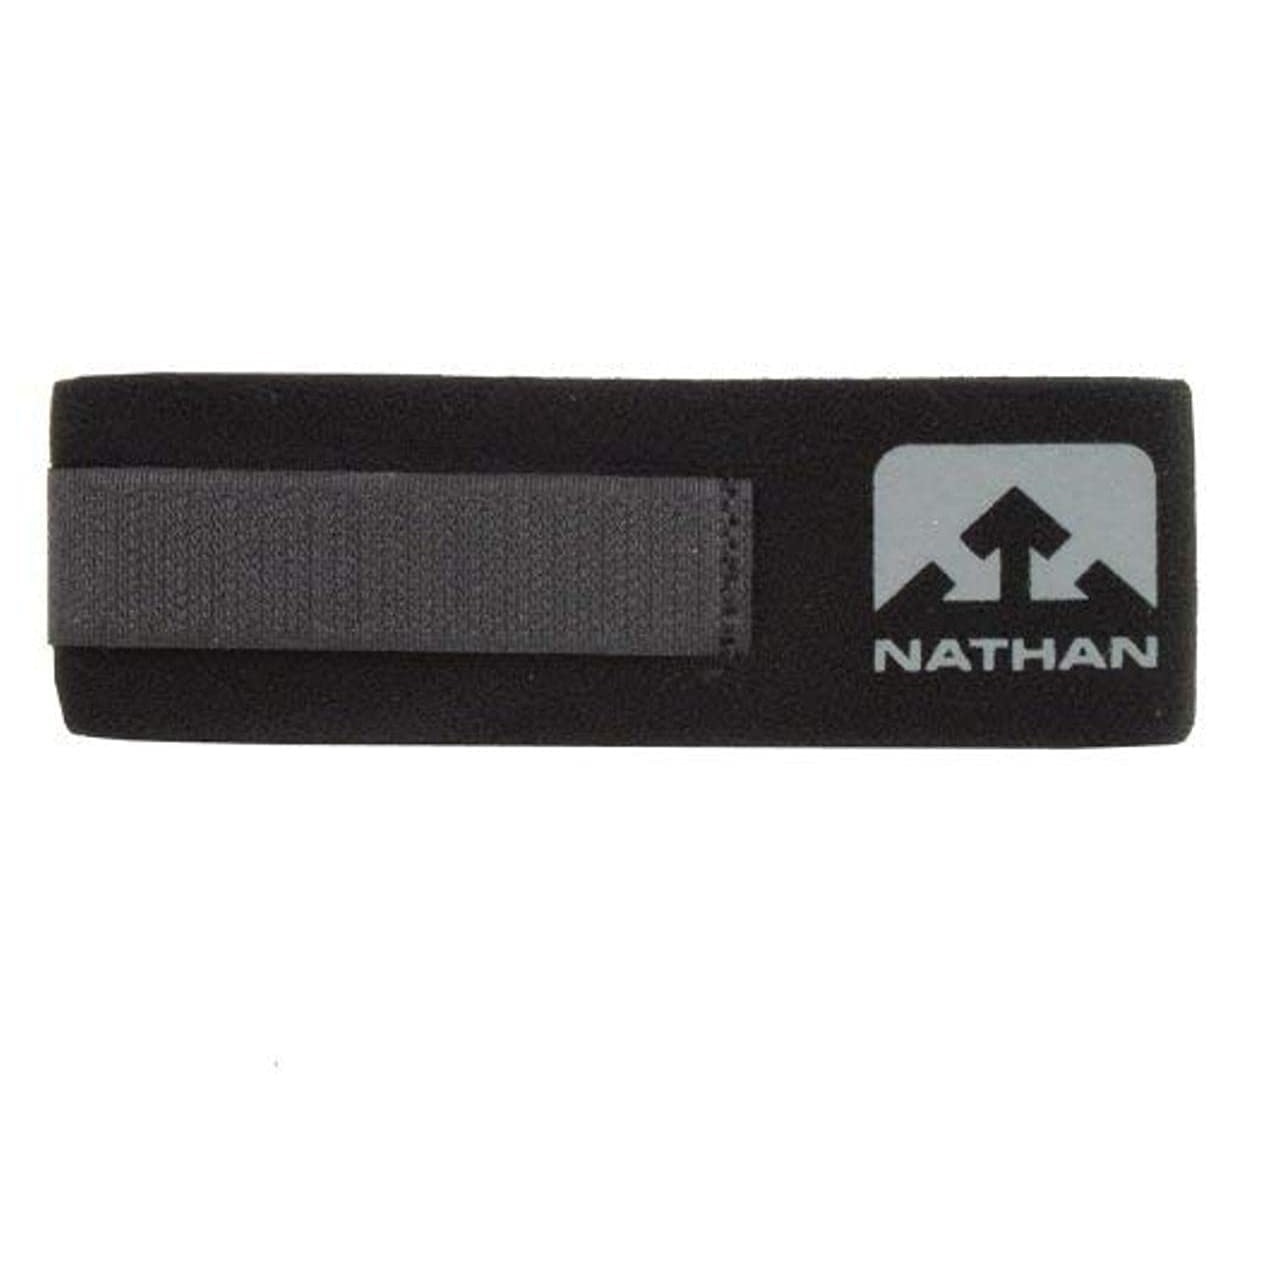 Nathan Triathlon Timing Chip Neoprene Ankle band Timing Chip Strap - Black